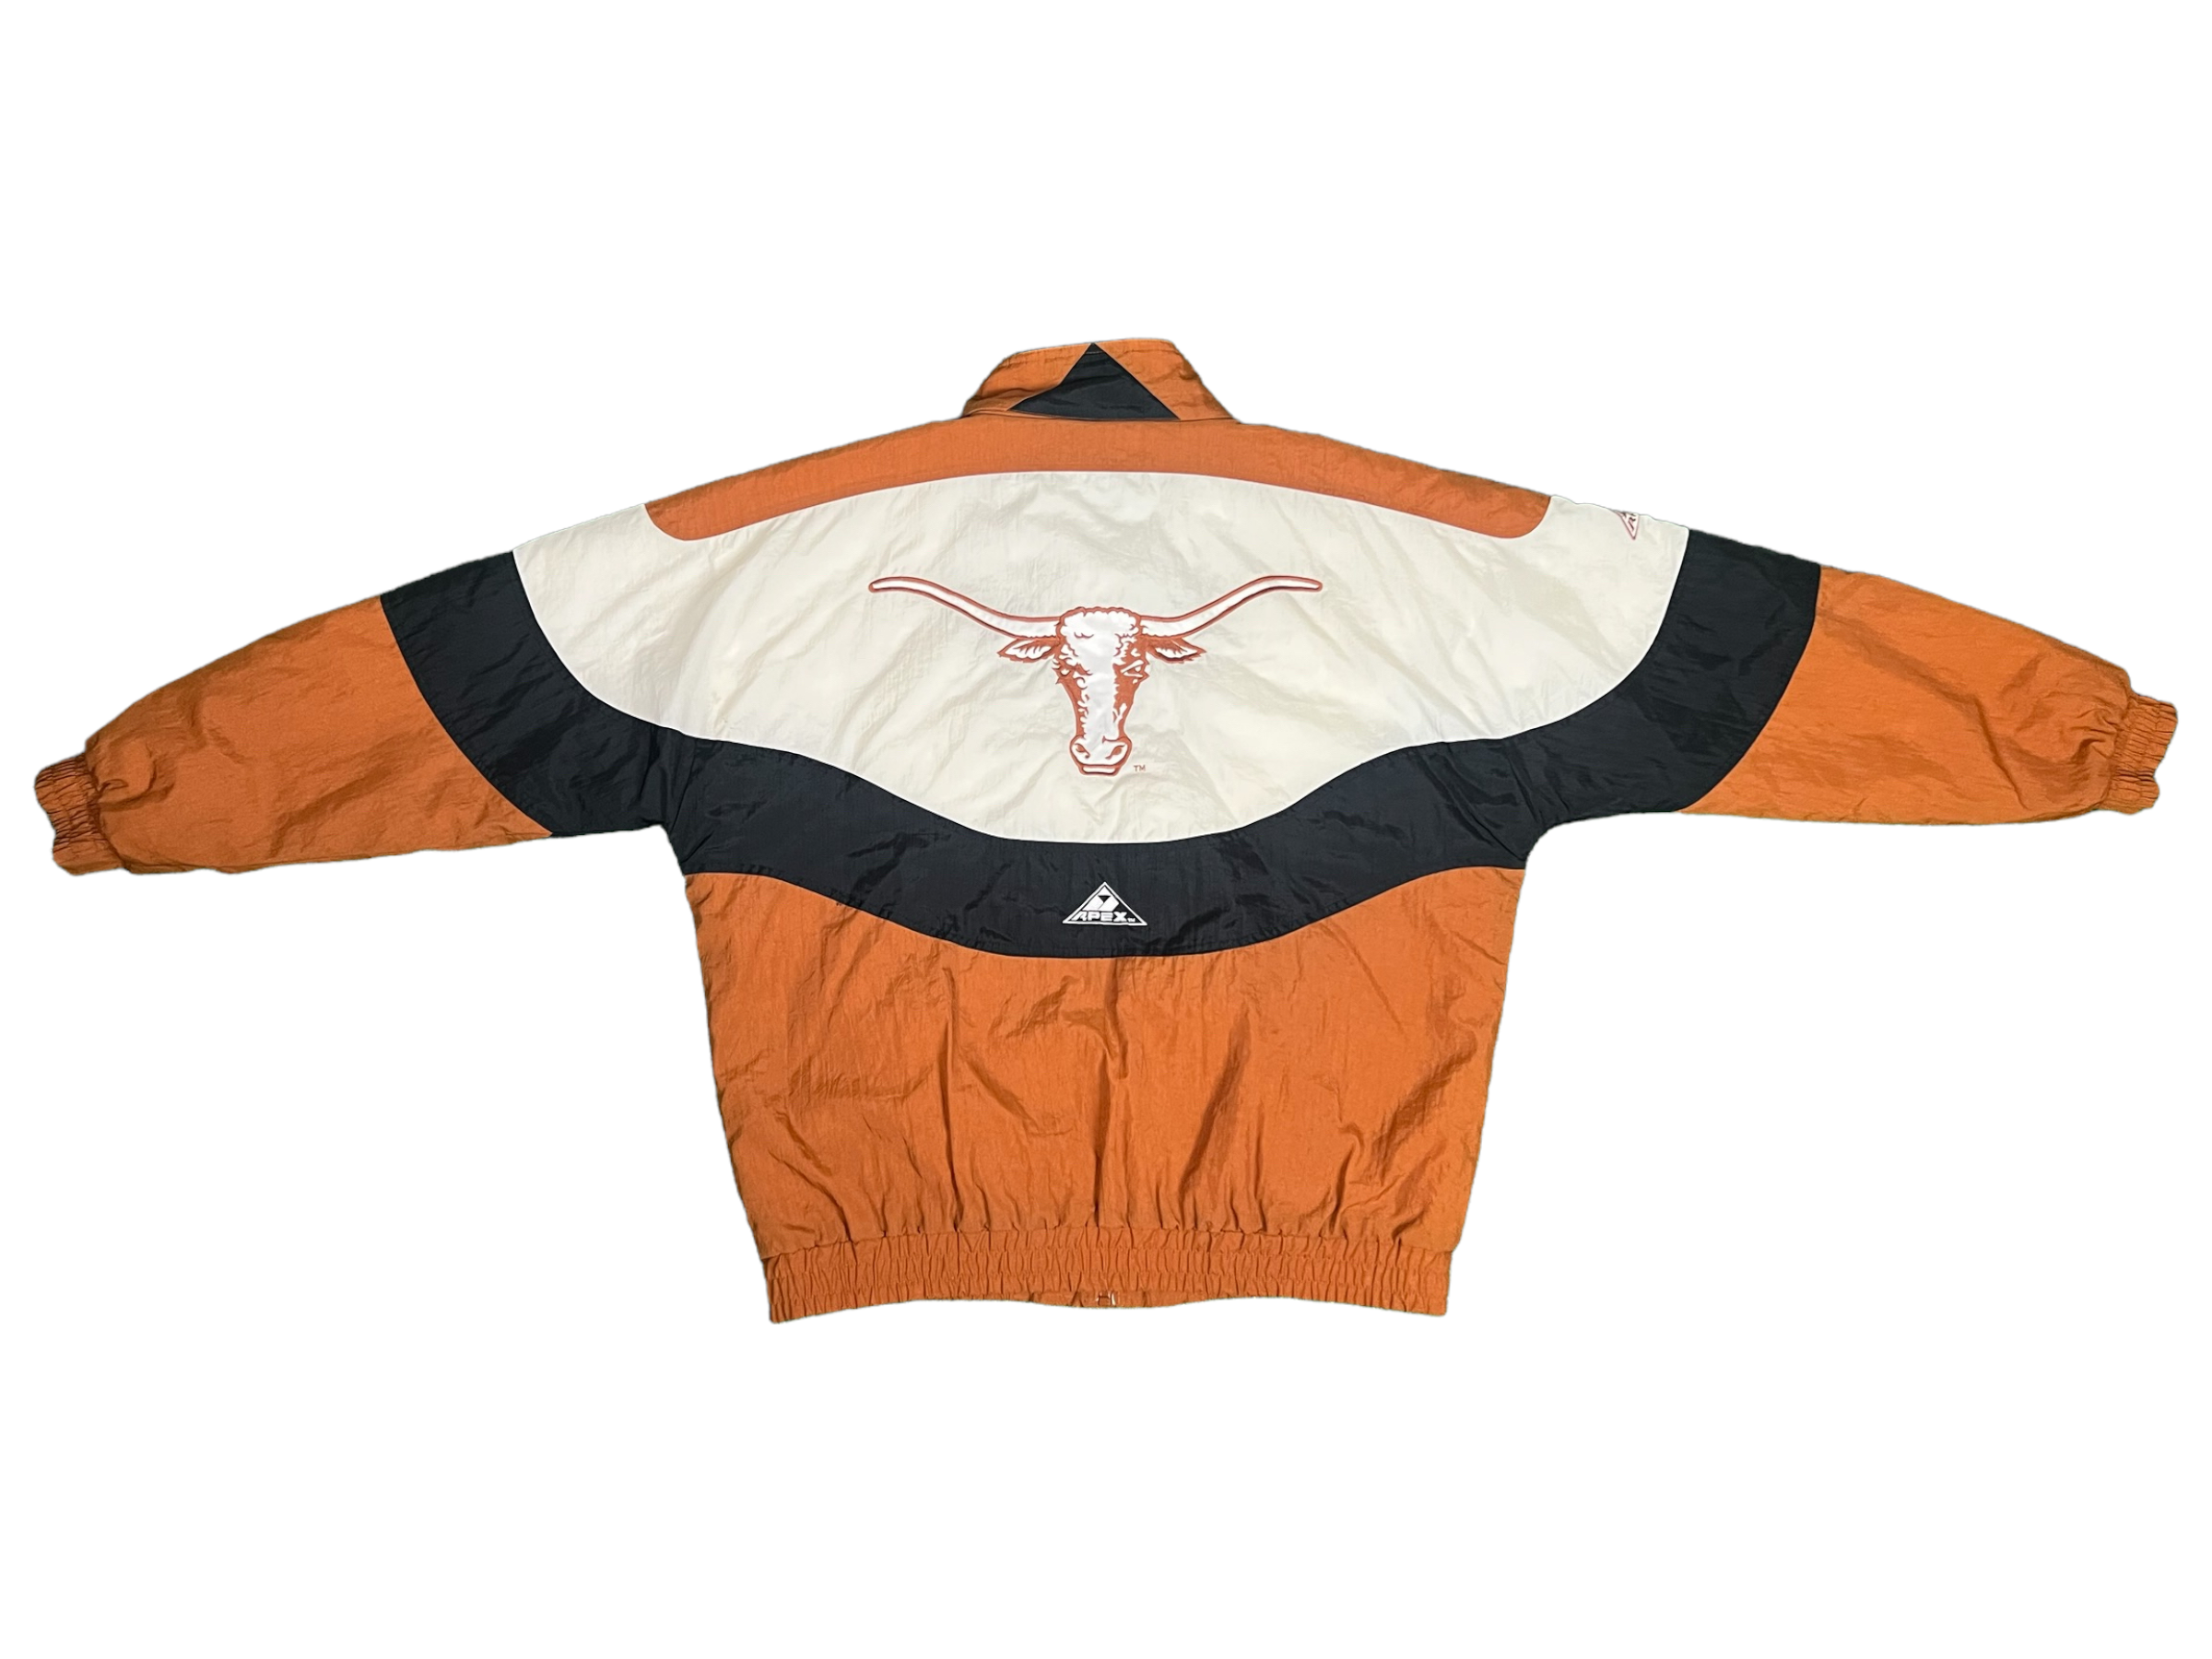 Vintage Apex One Houston Oilers Puffer Jacket